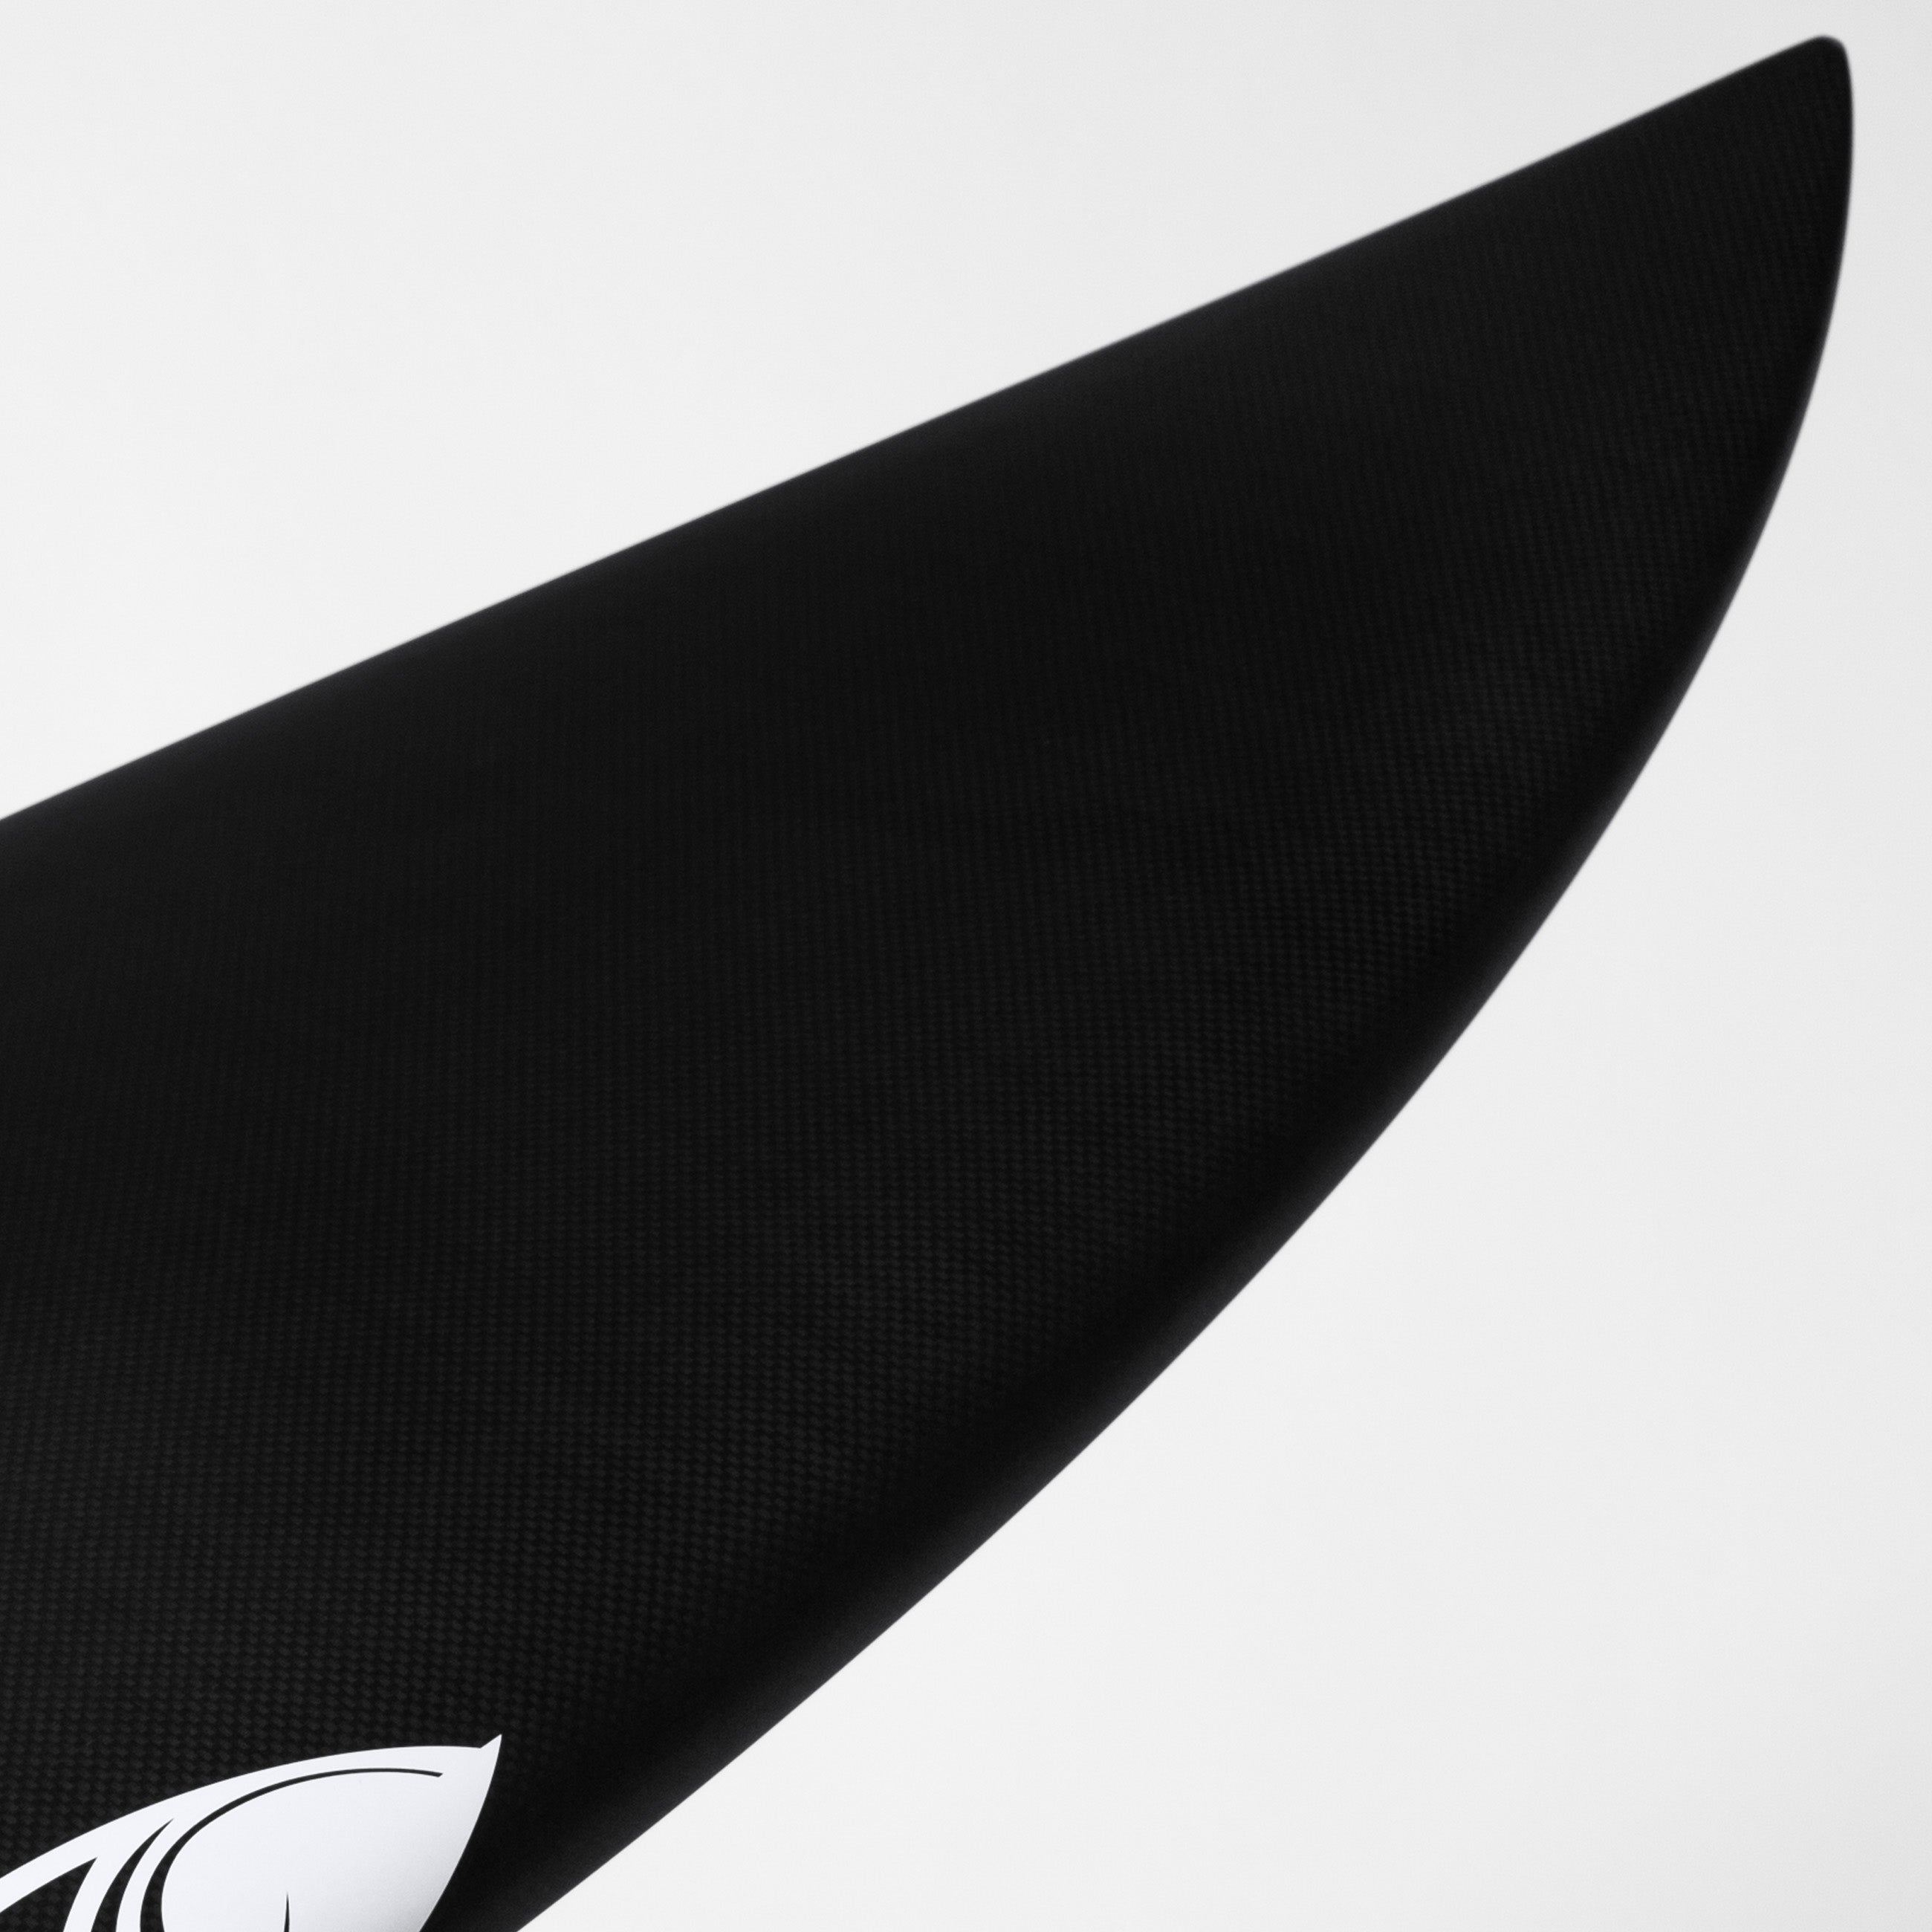 CHEAT CODE (C1 LITE) – Sharp Eye Surfboards